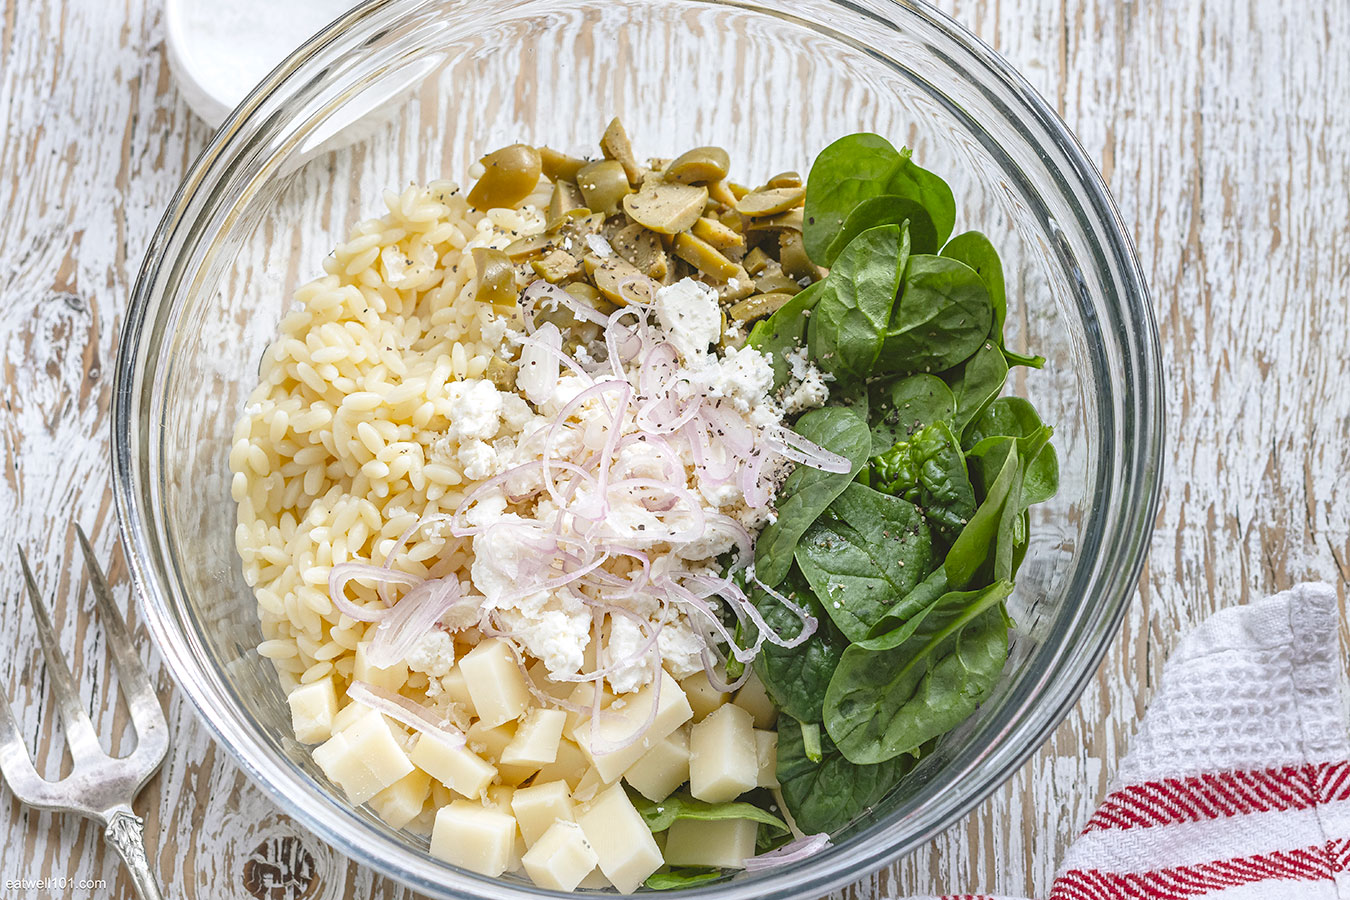 Orzo Pasta Salad ingredients